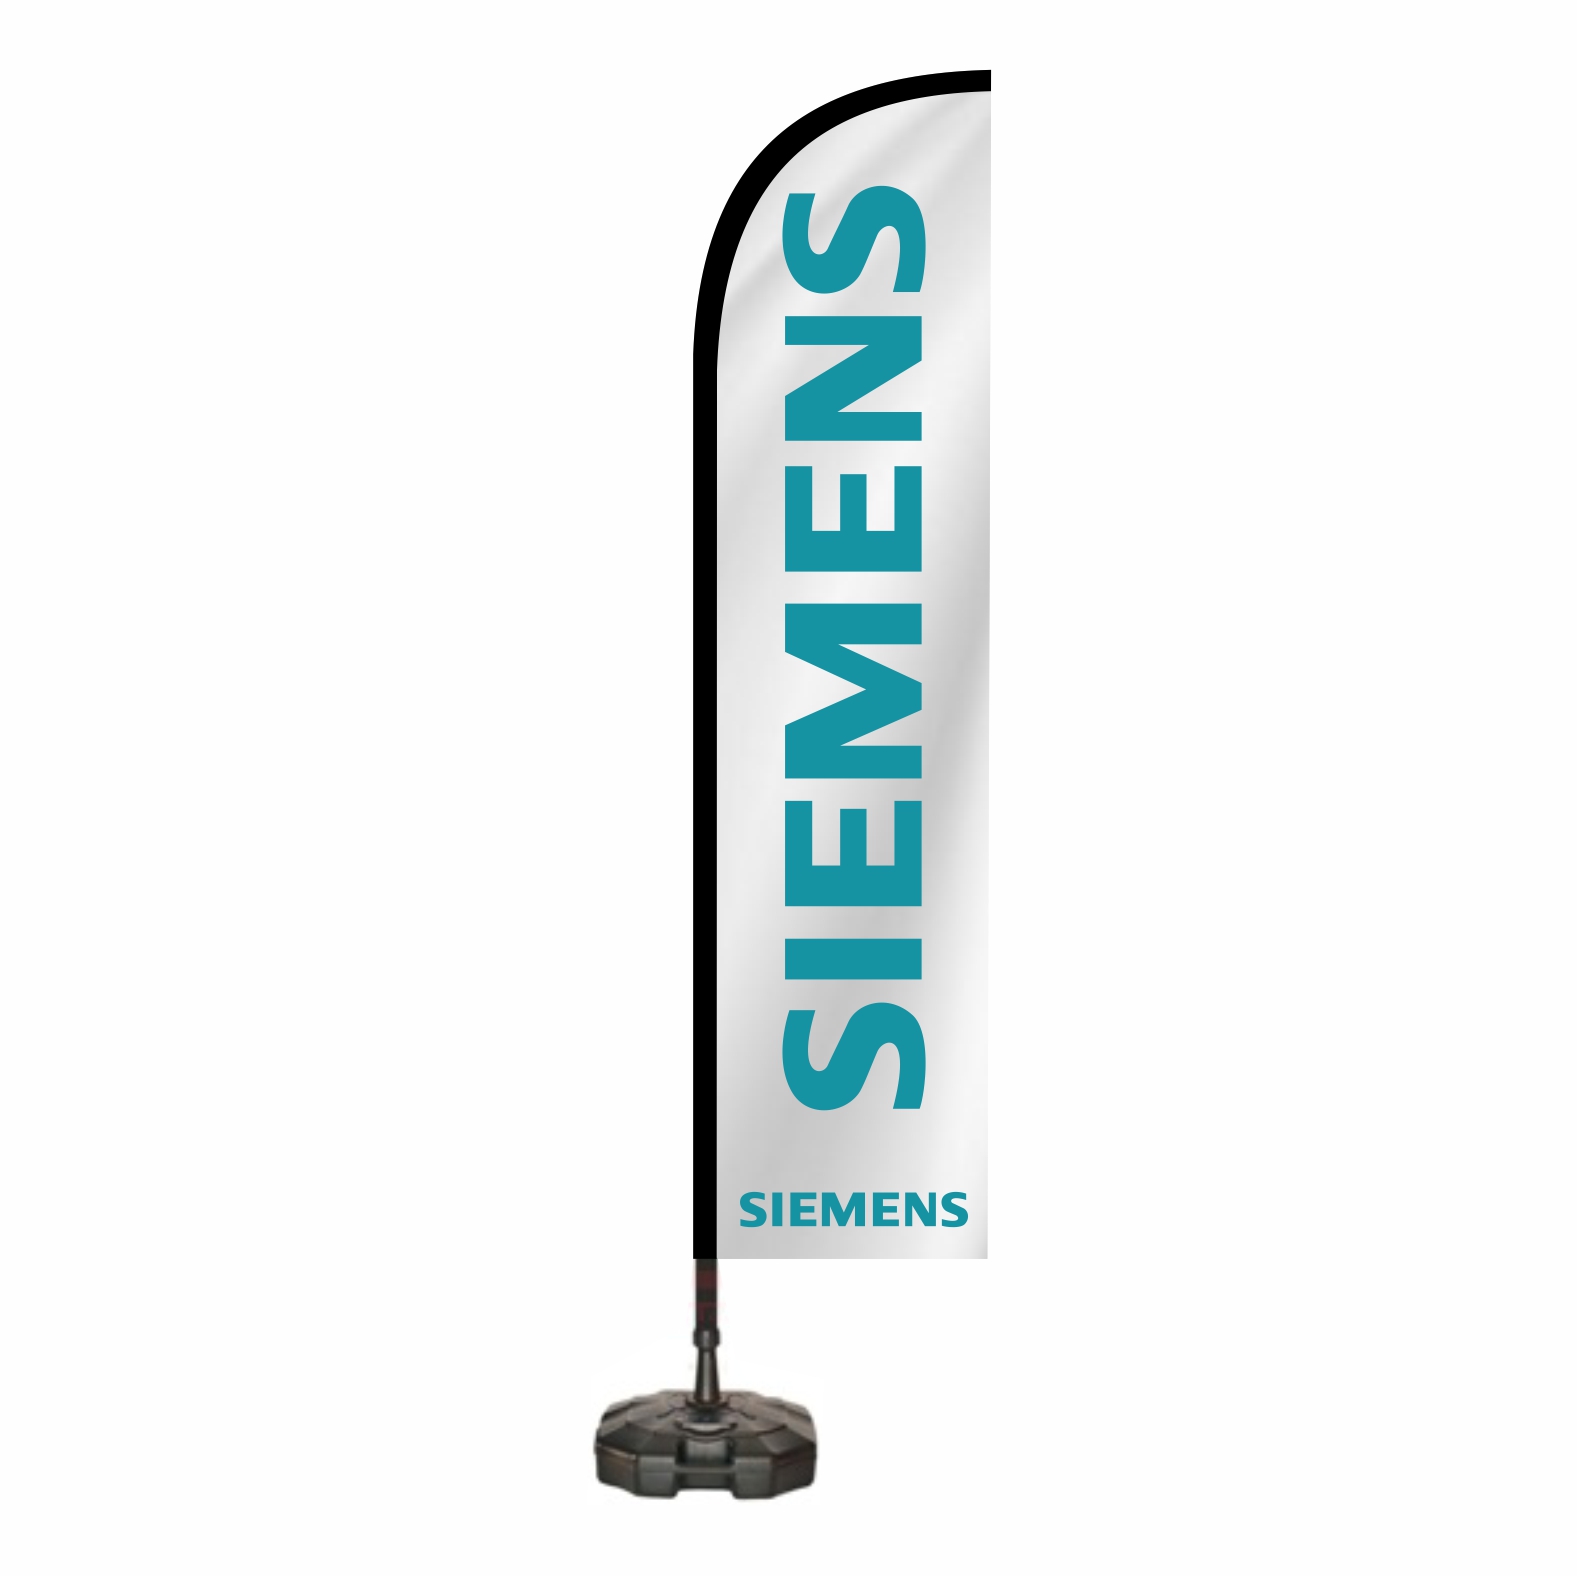 Siemens Oltal Bayra imalat